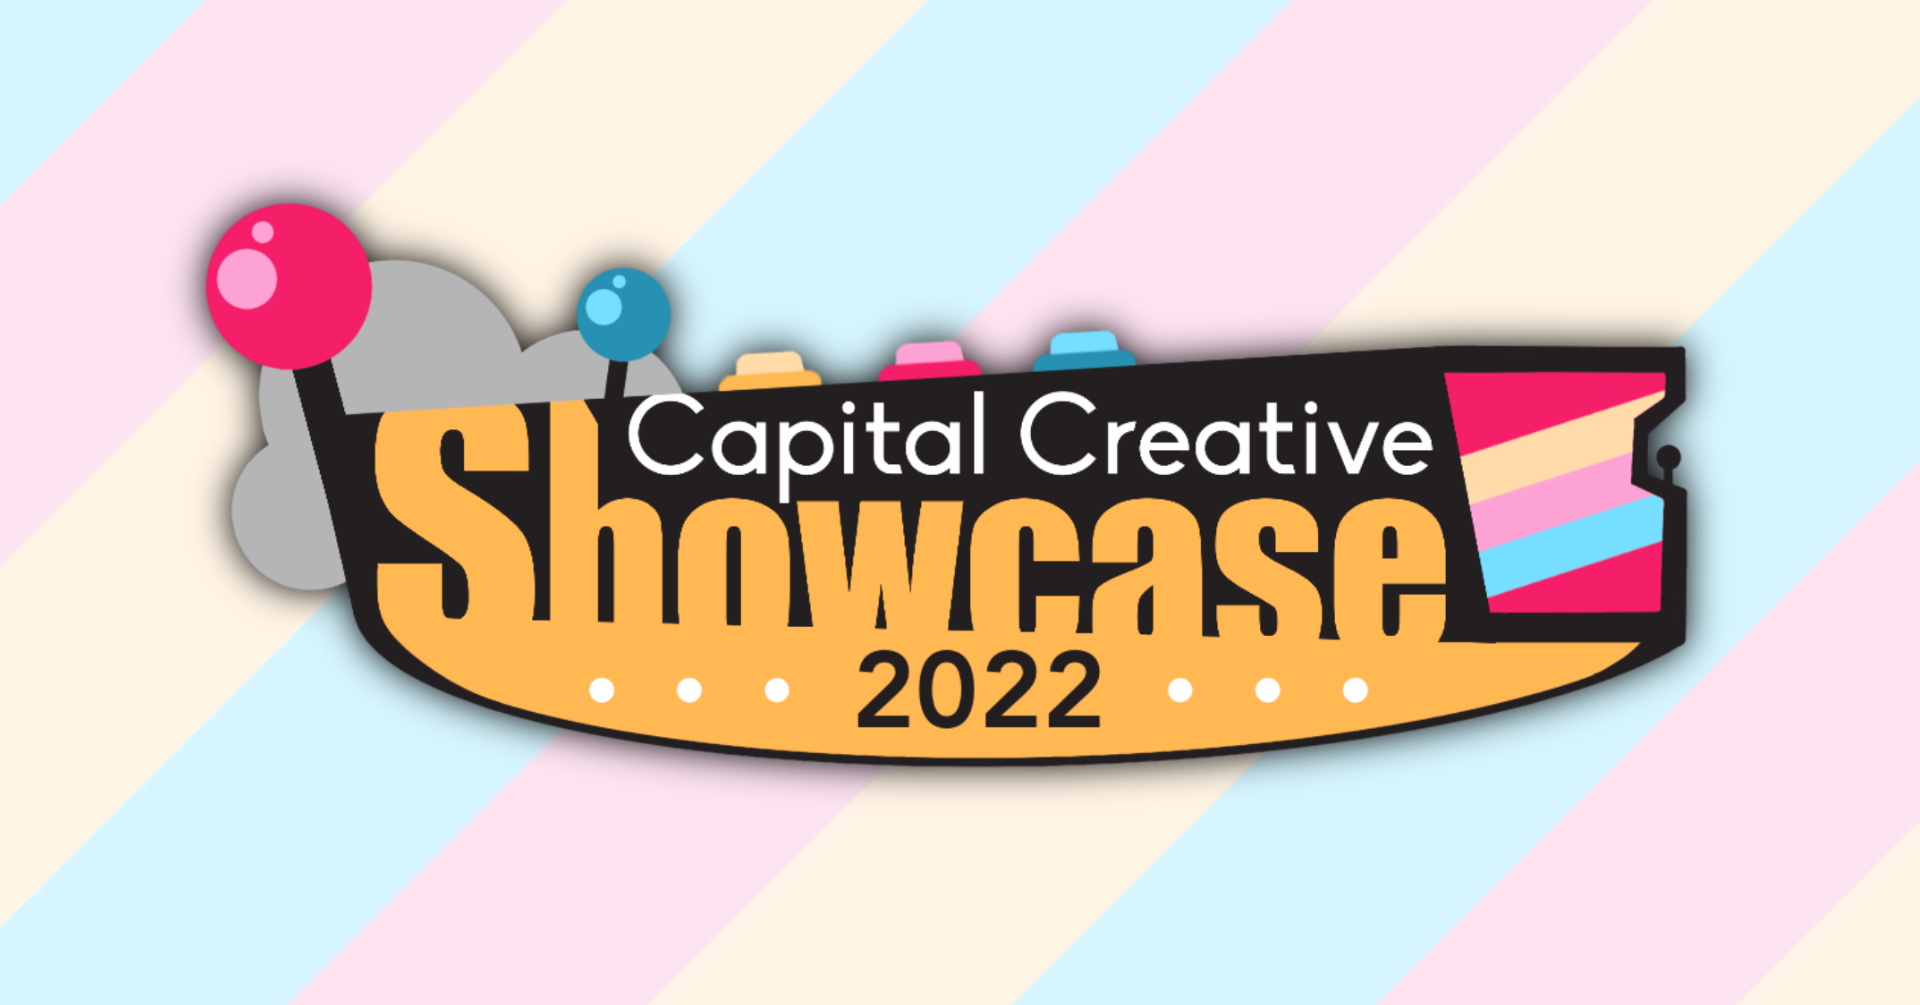 Capital Creative Showcase 2022